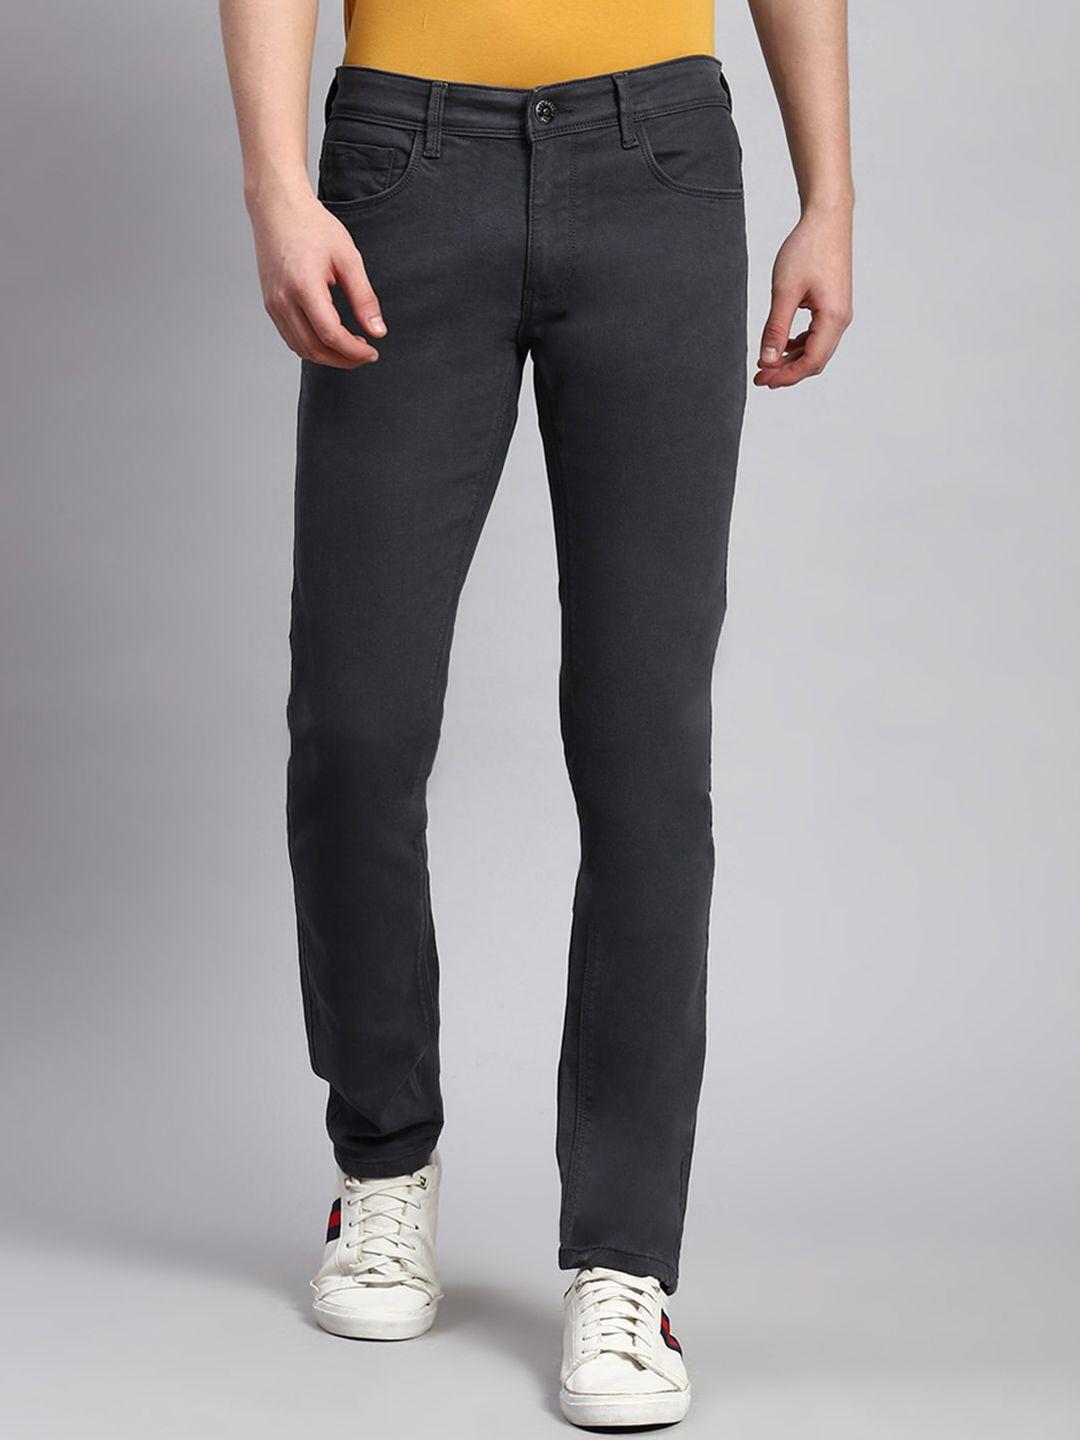 monte-carlo-men-narrow-mid-rise-clean-look-jeans